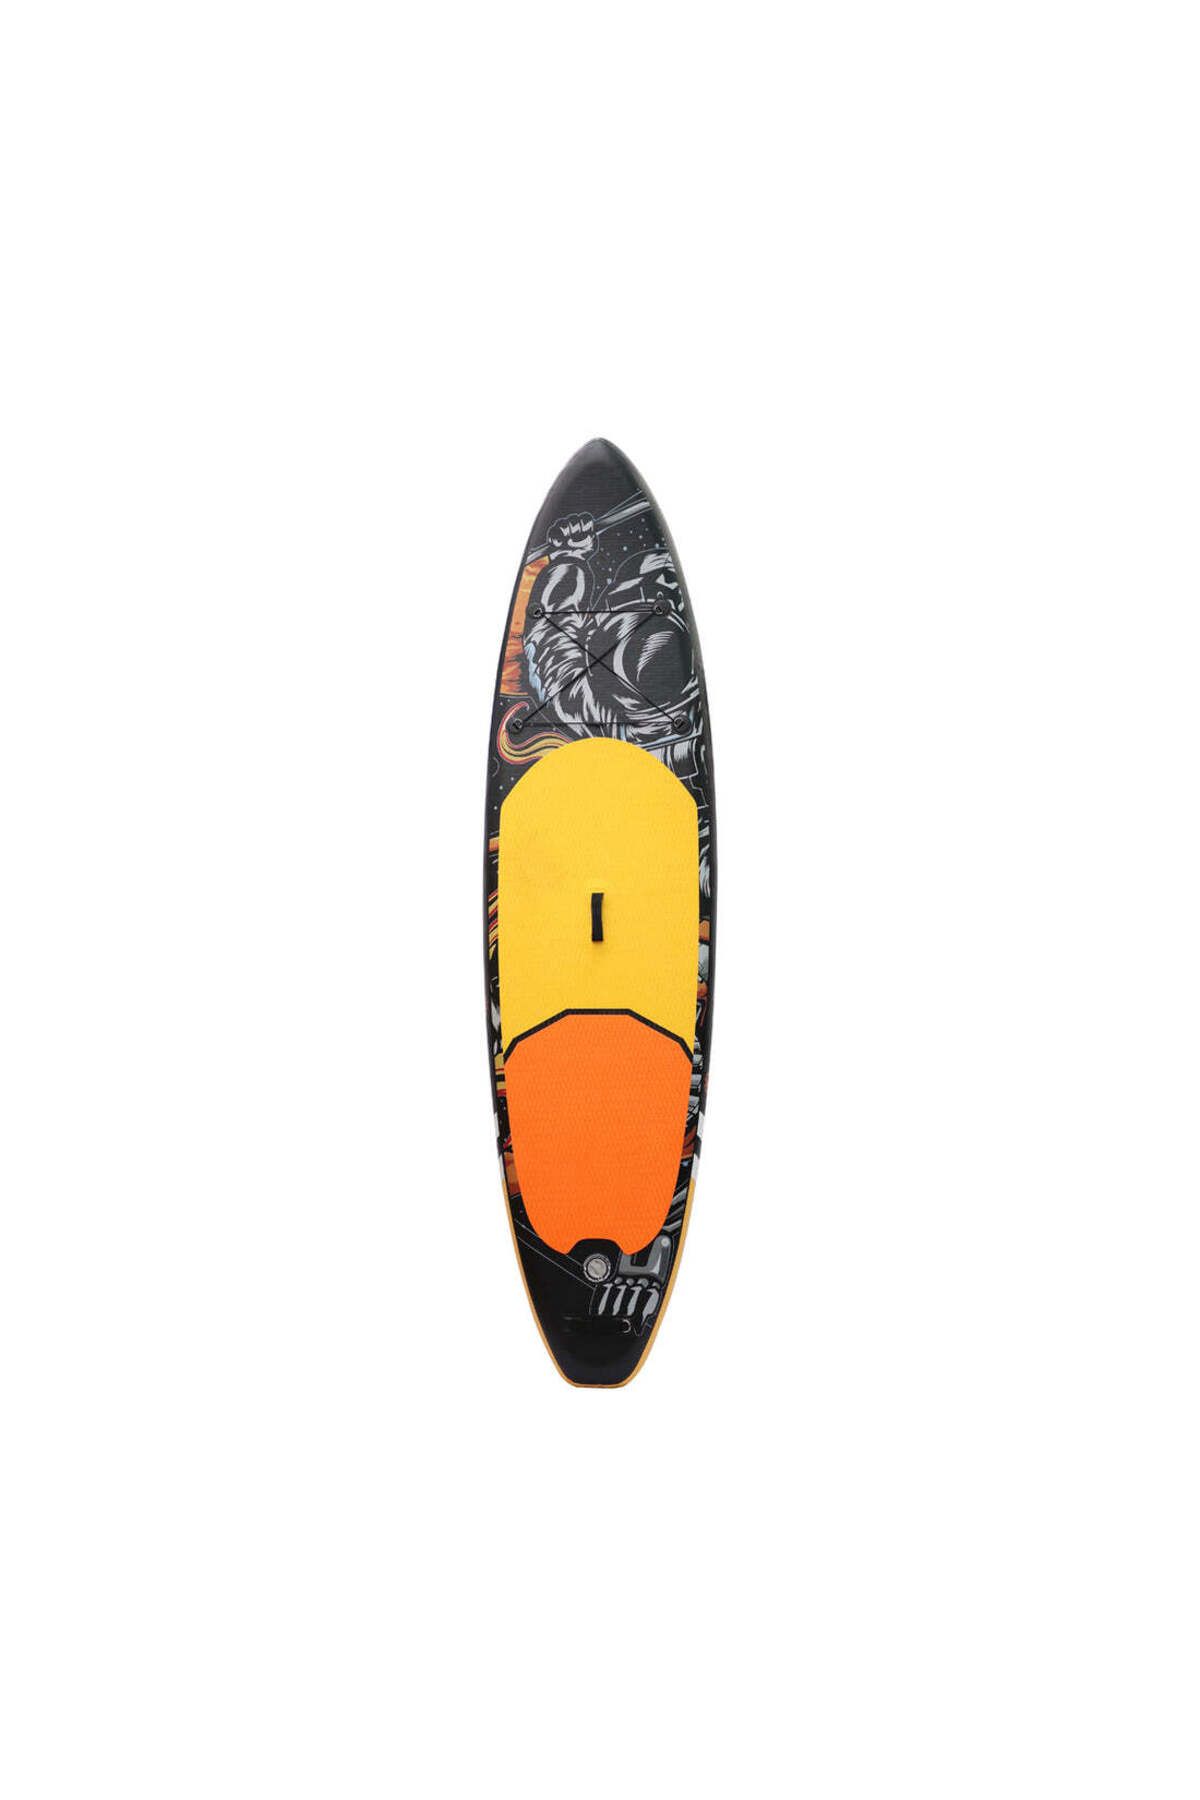 Greenmall Tortuga Şişirilebilir Paddle Board - SUP 320 cm